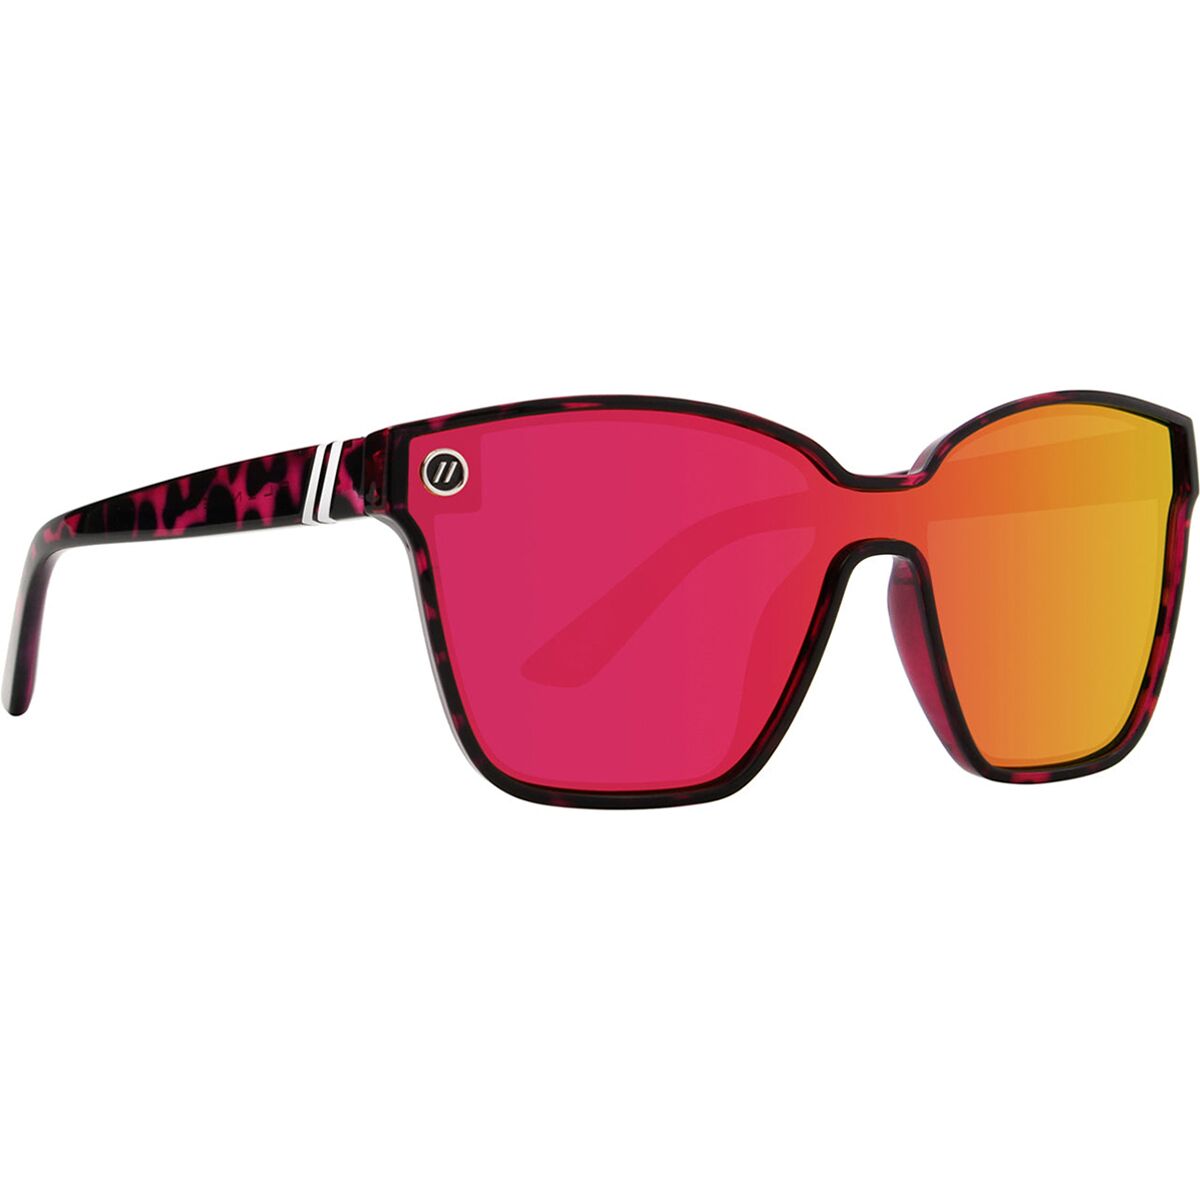 Blenders Eyewear Lady Inferno Buttertron Polarized Sunglasses